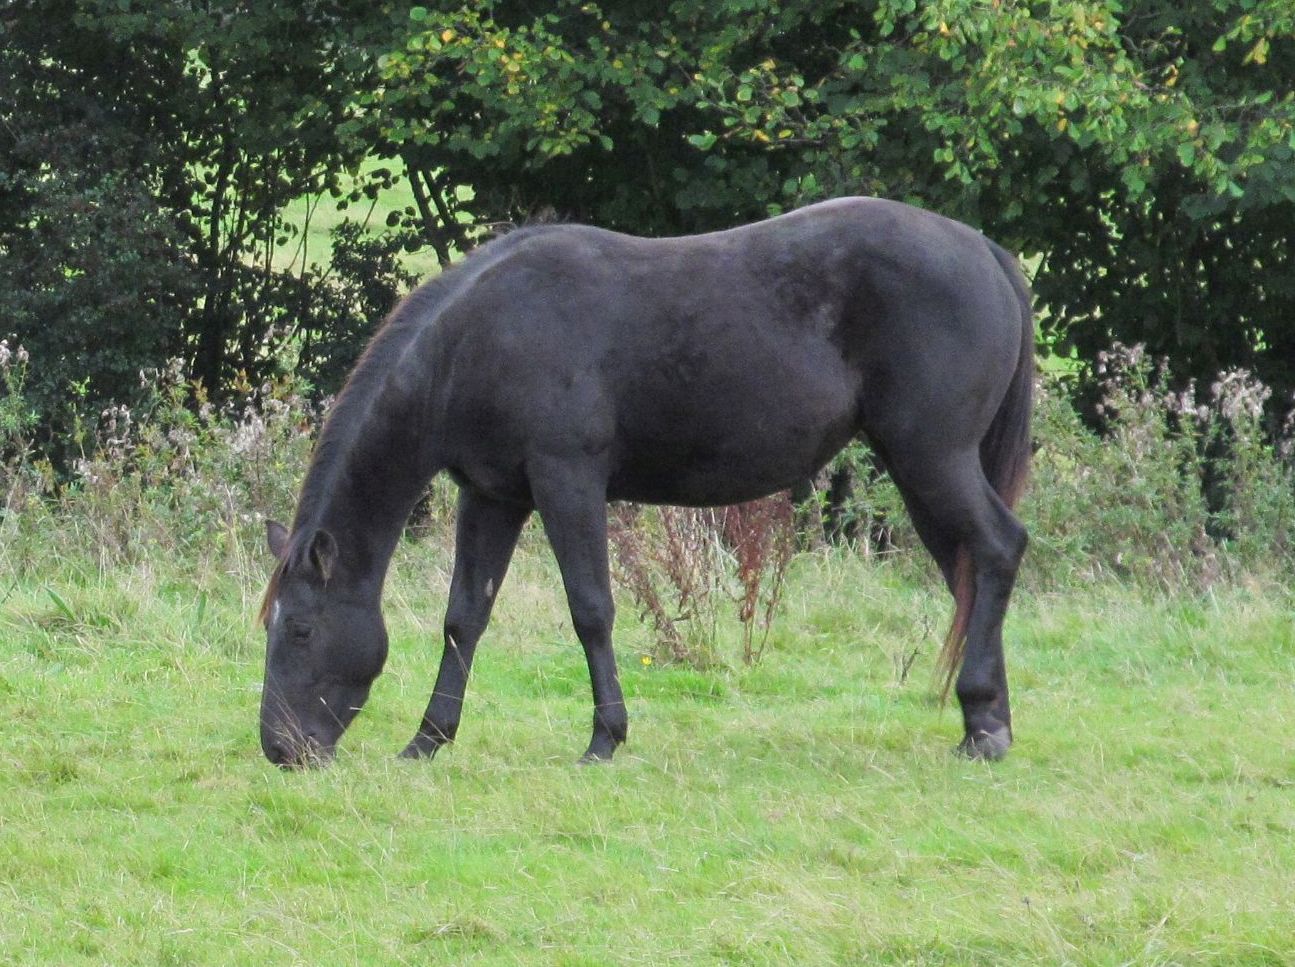 Quarter Horse mare, Kings Black Frost